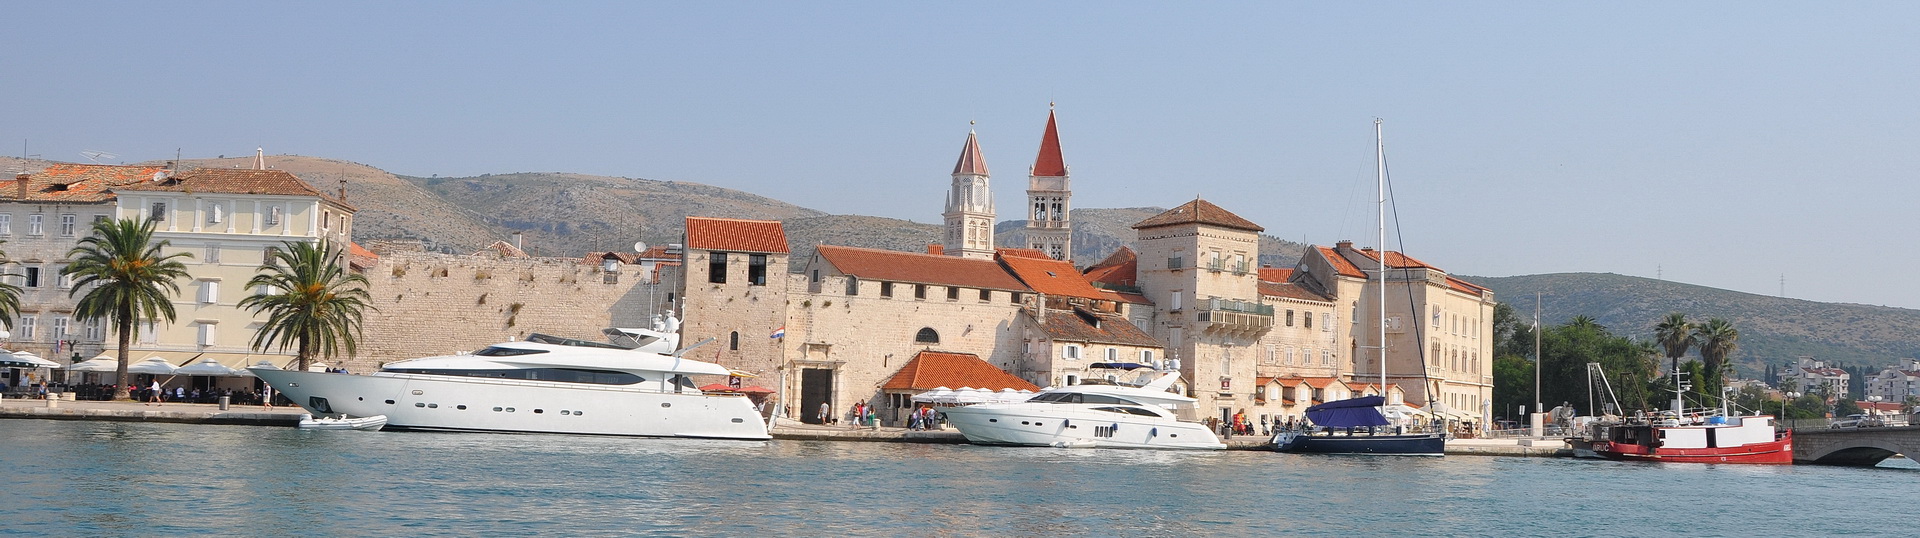 Вид с острова Чиово на набережную Трогира Хорватия 